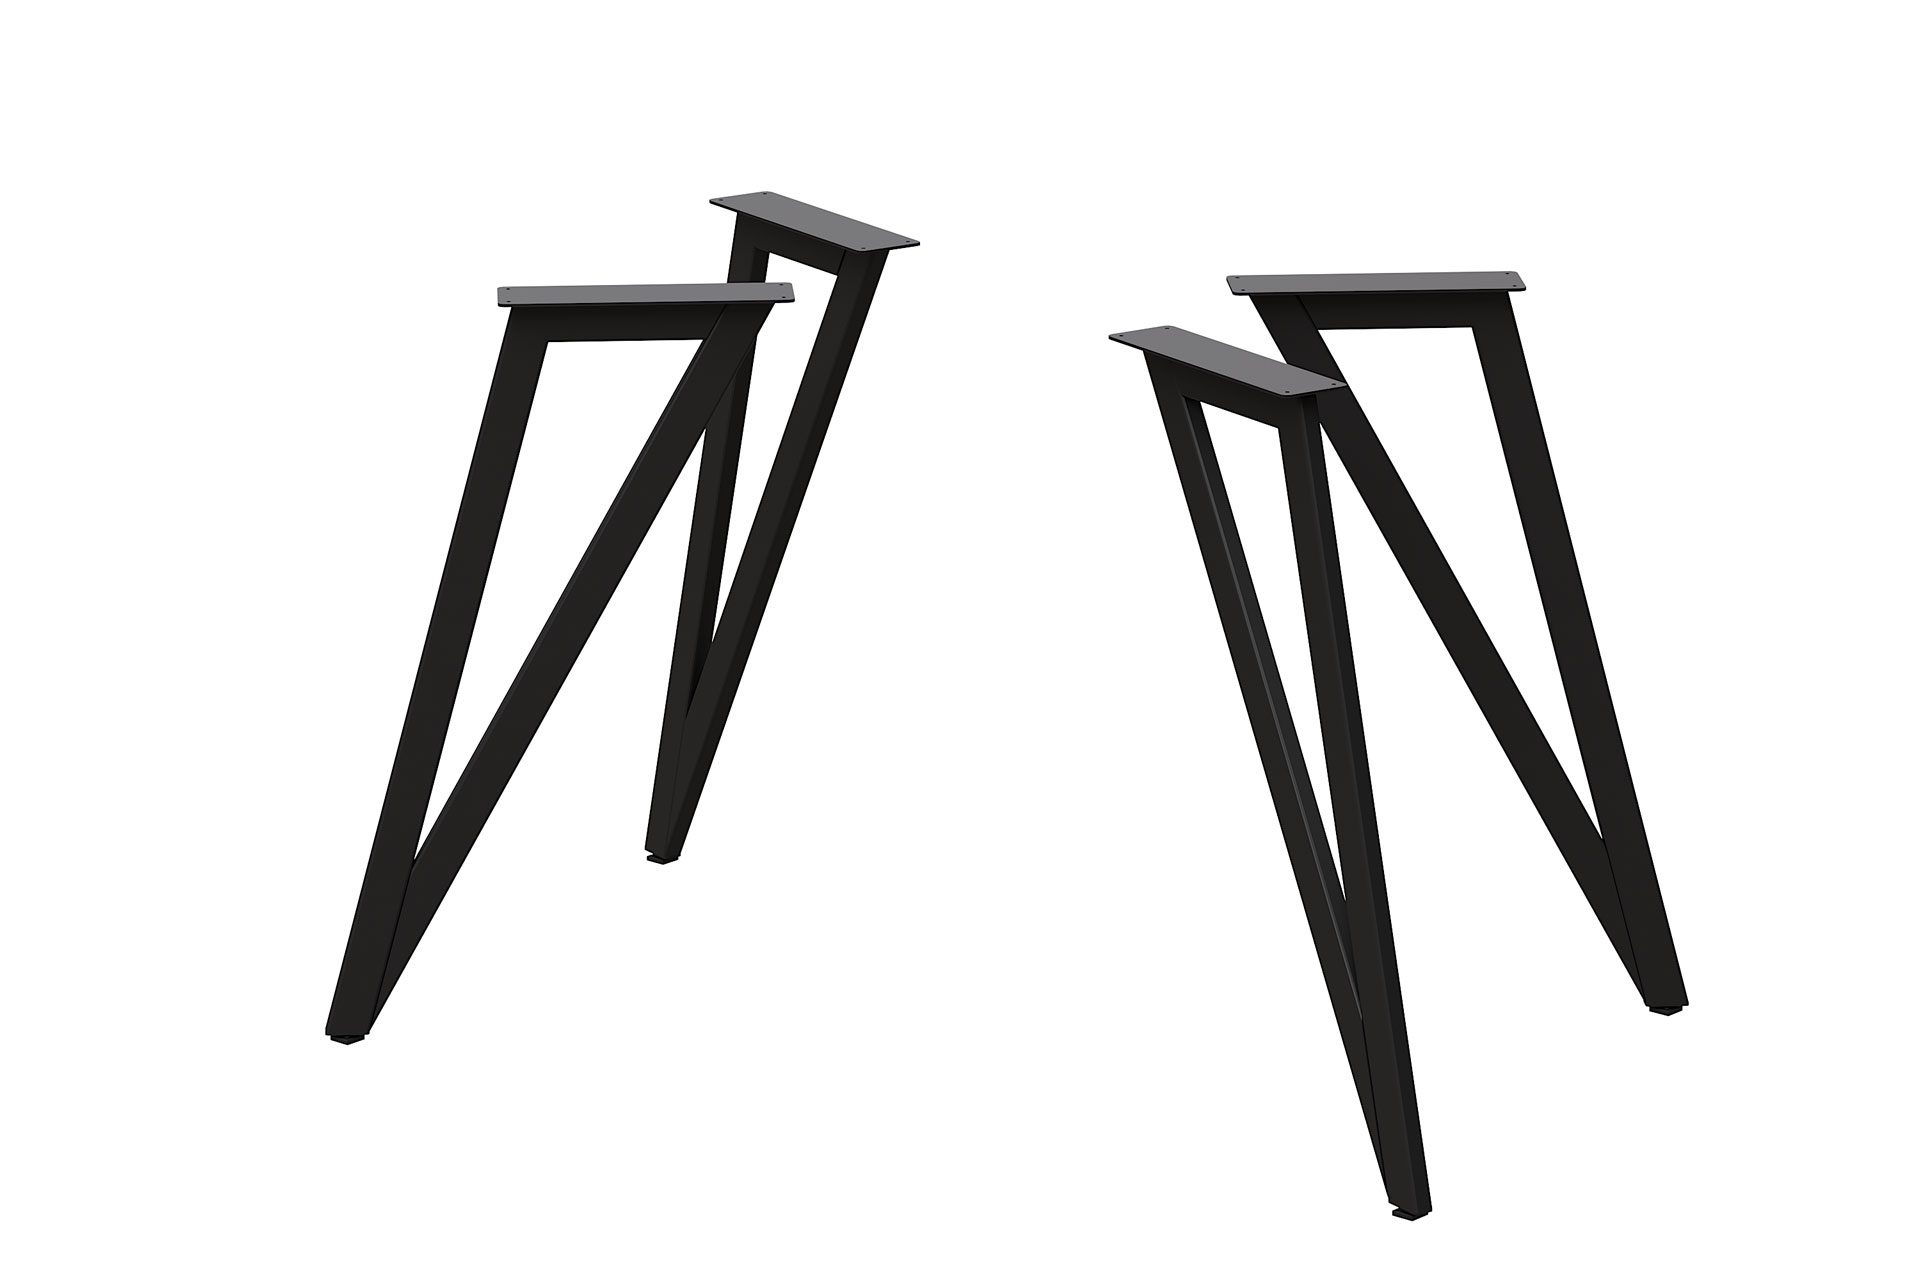 Dreieck Tischgestell Metall schwarz – Set aus 4 Füßen